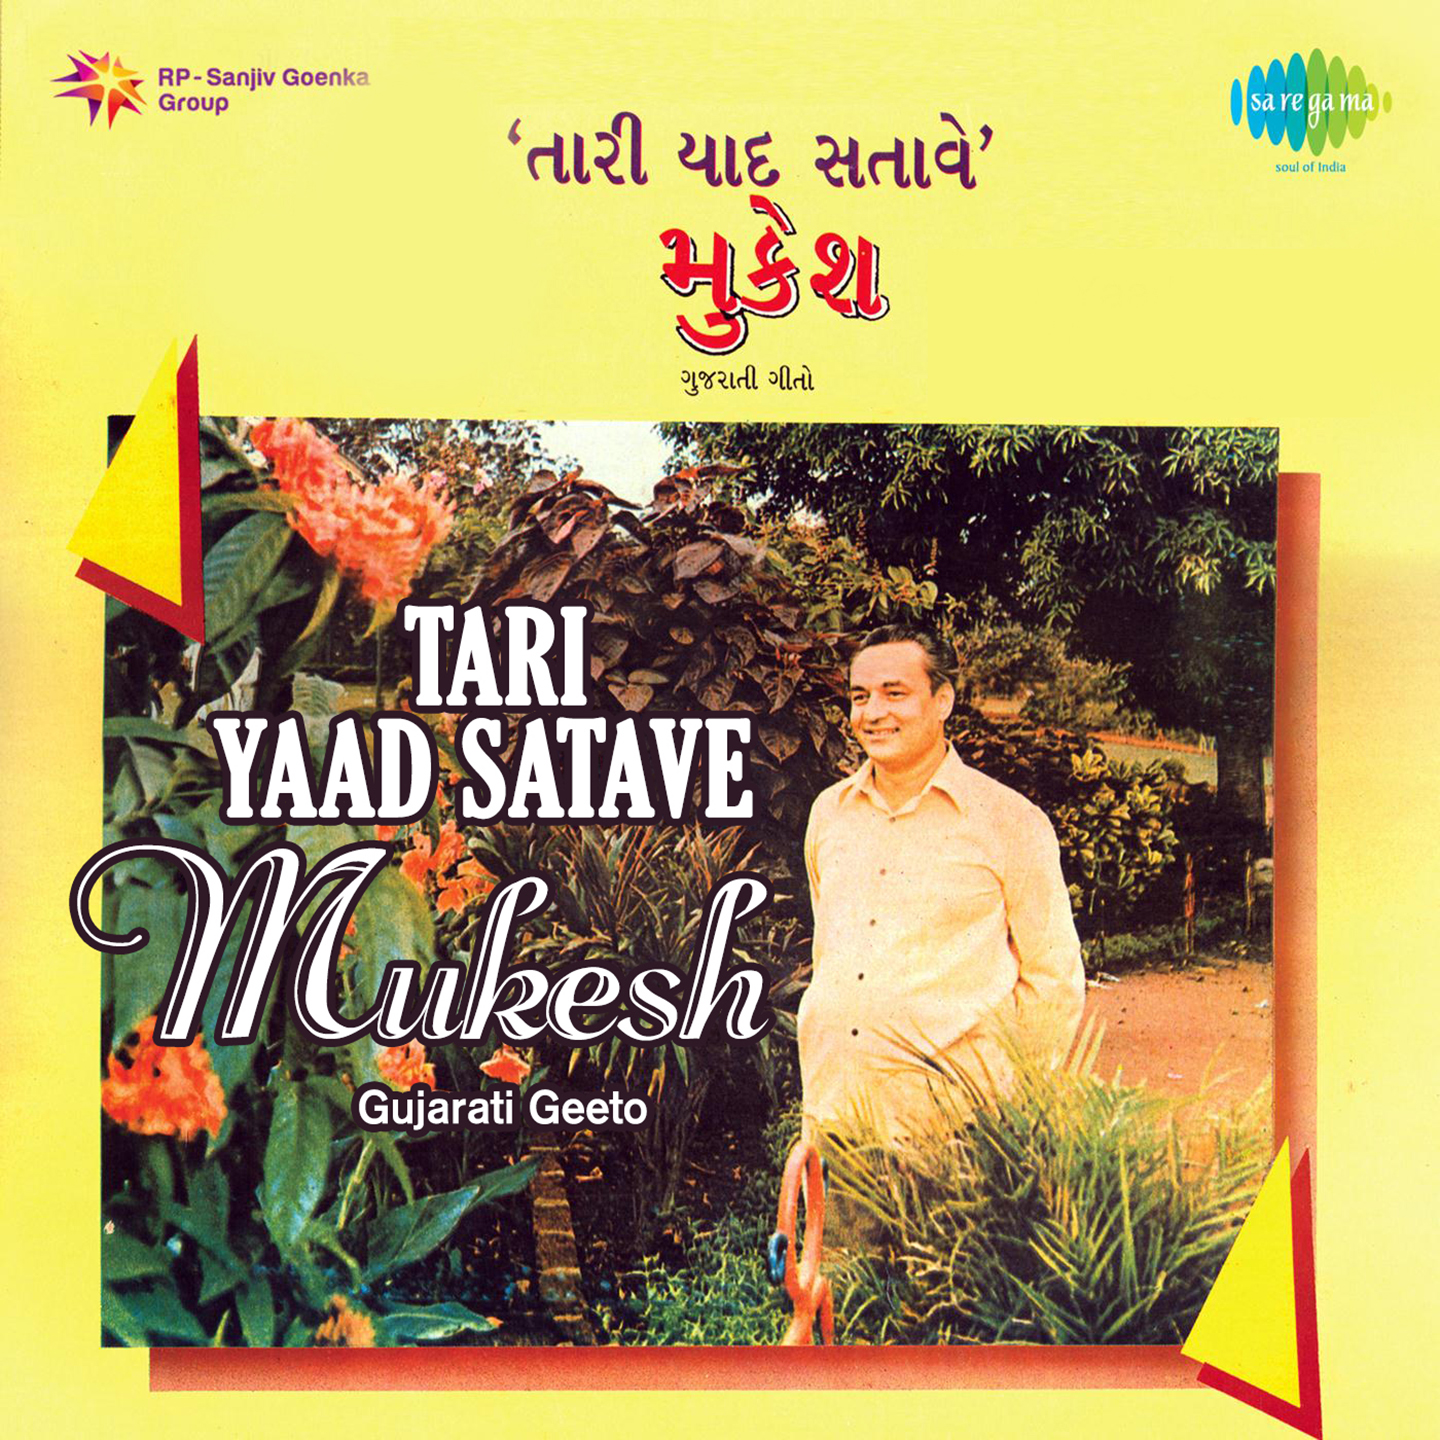 Tari Yaad Satave Gujarati Geeto Mukesh